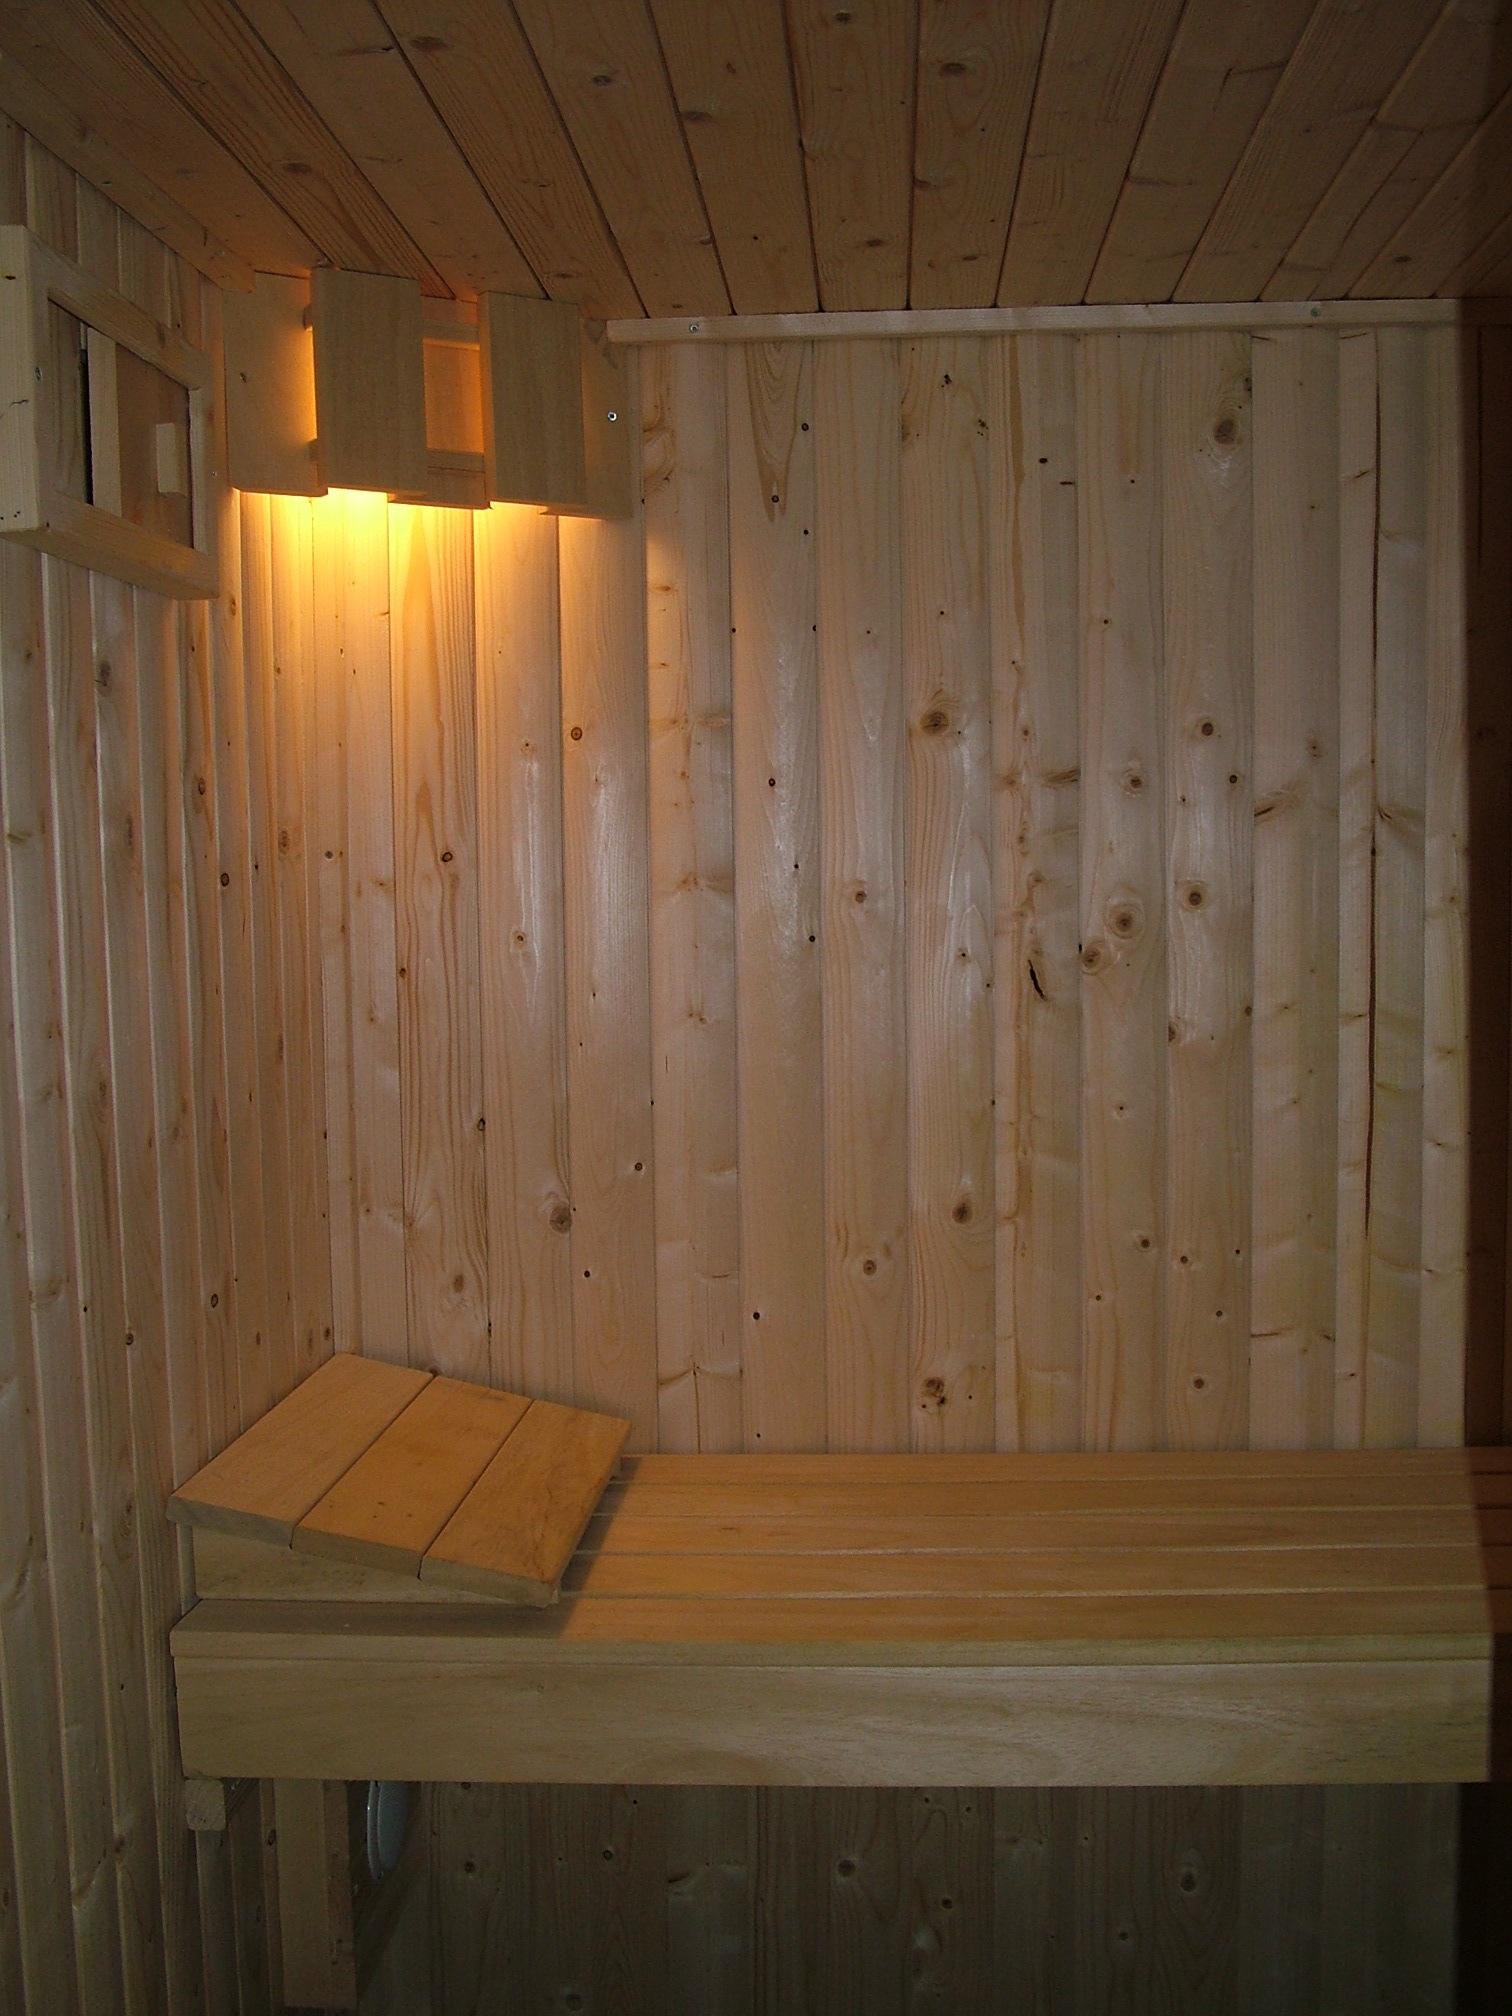 pampering and sauna